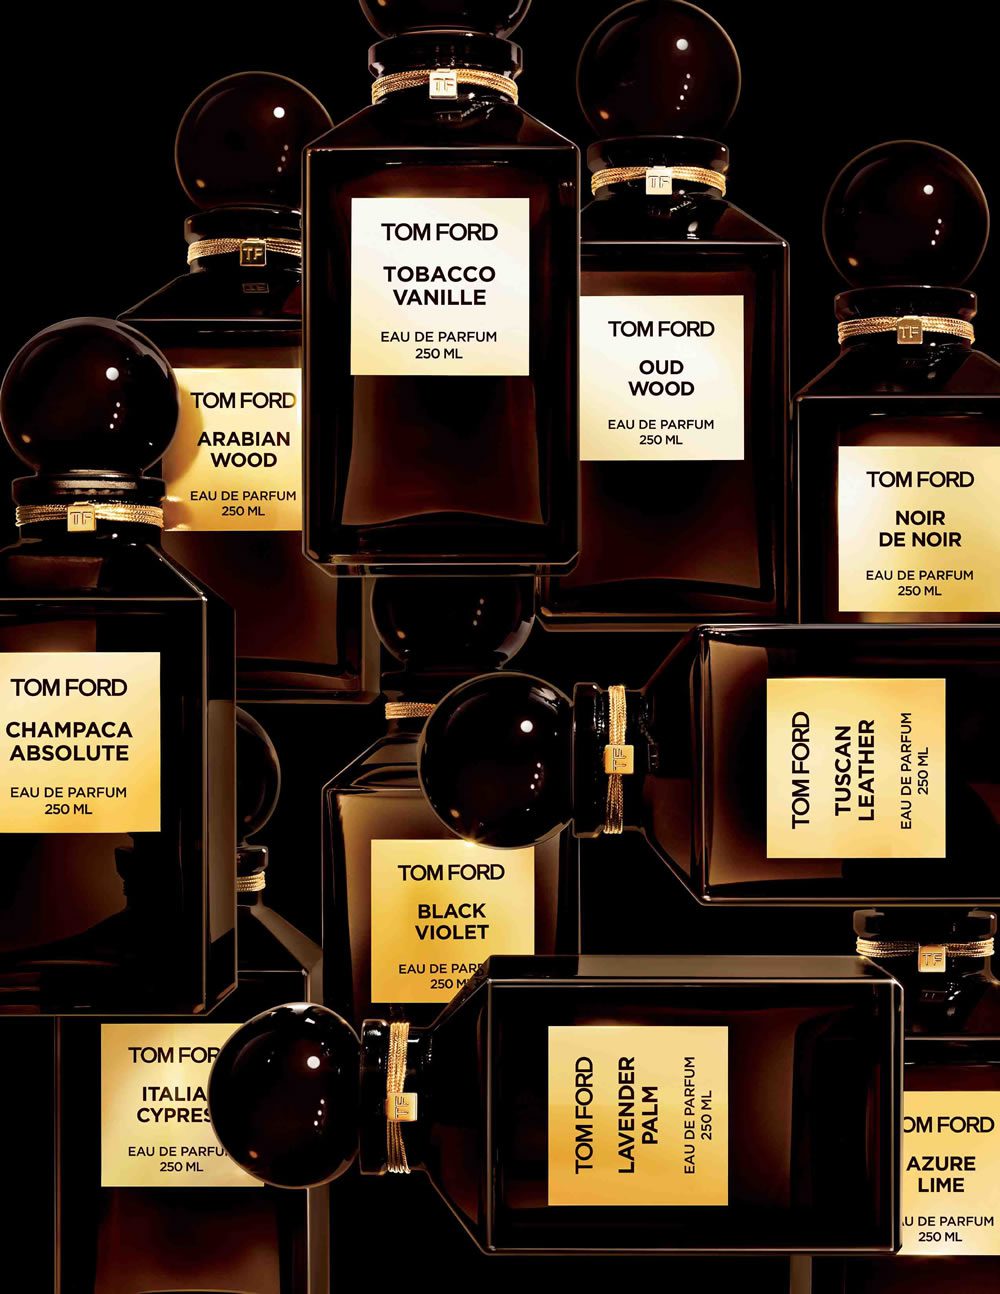 Tom Ford Rose Garden Collection Fragrances Reviewed — MEN'S STYLE BLOG